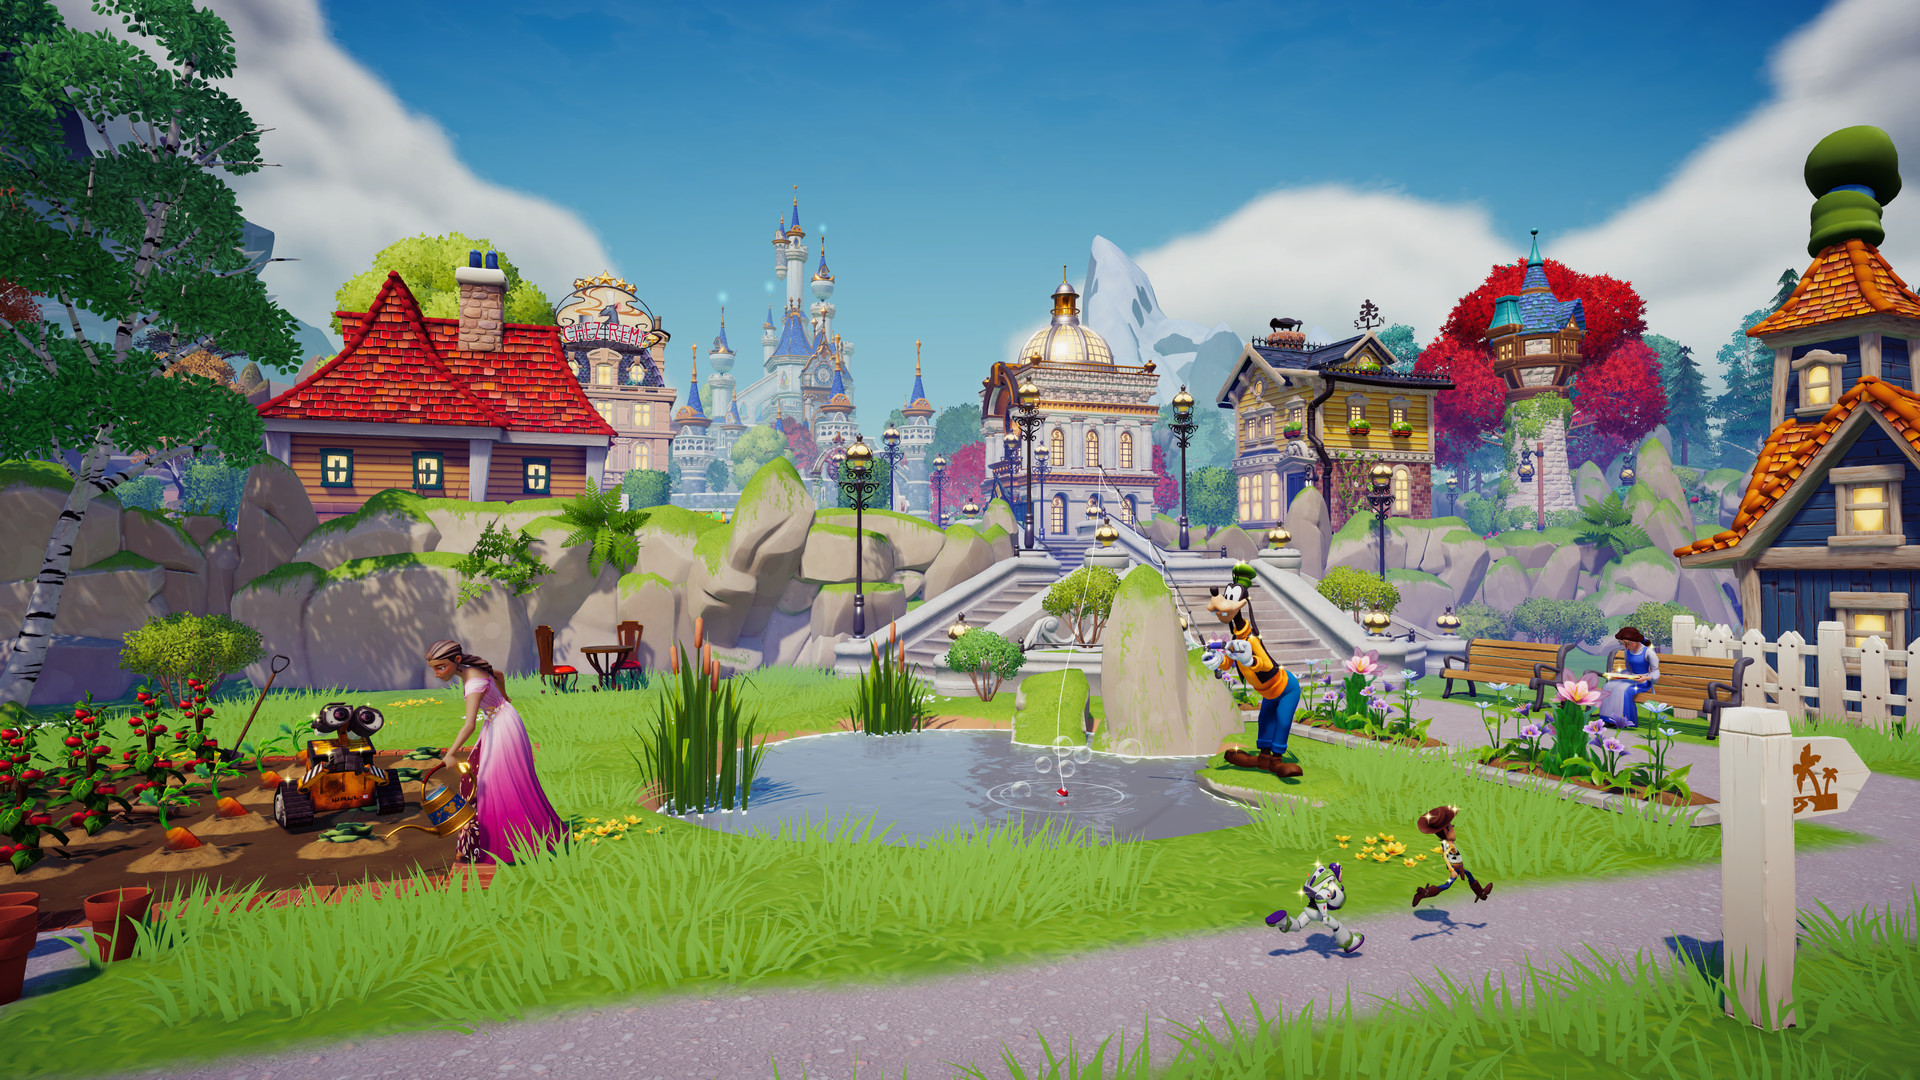 Disney Dreamlight Valley Steam Account